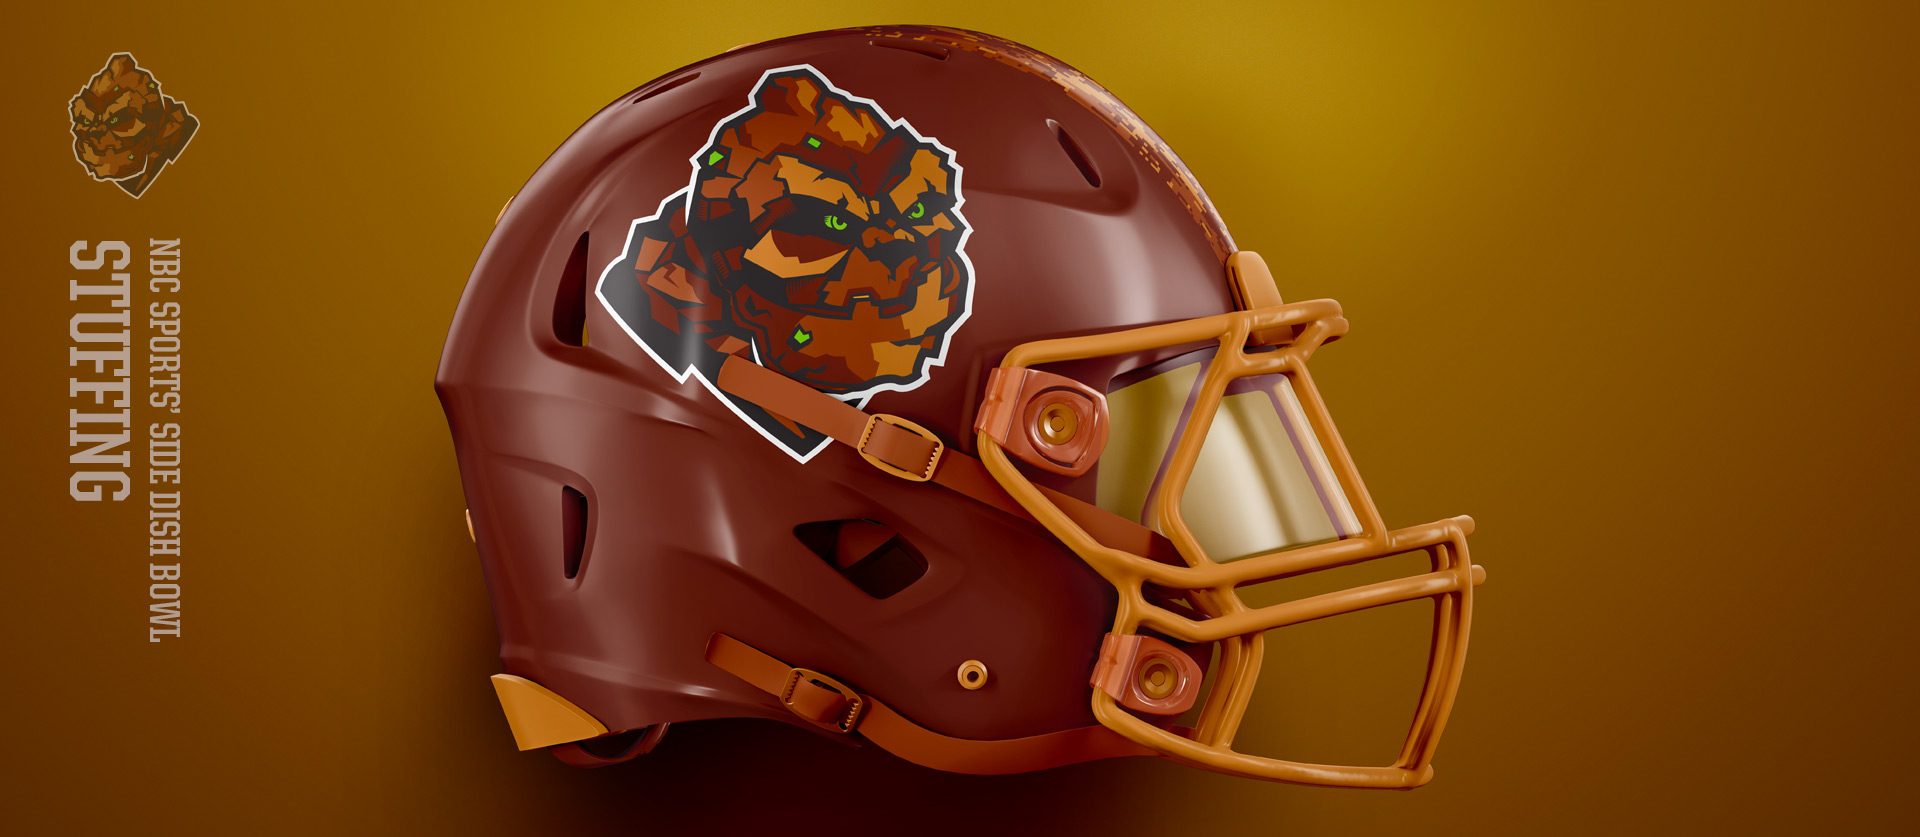 Stuffing Helmet Side View - Football Uniform Design for NBC Sports Thanksgiving Side Dish Bowl